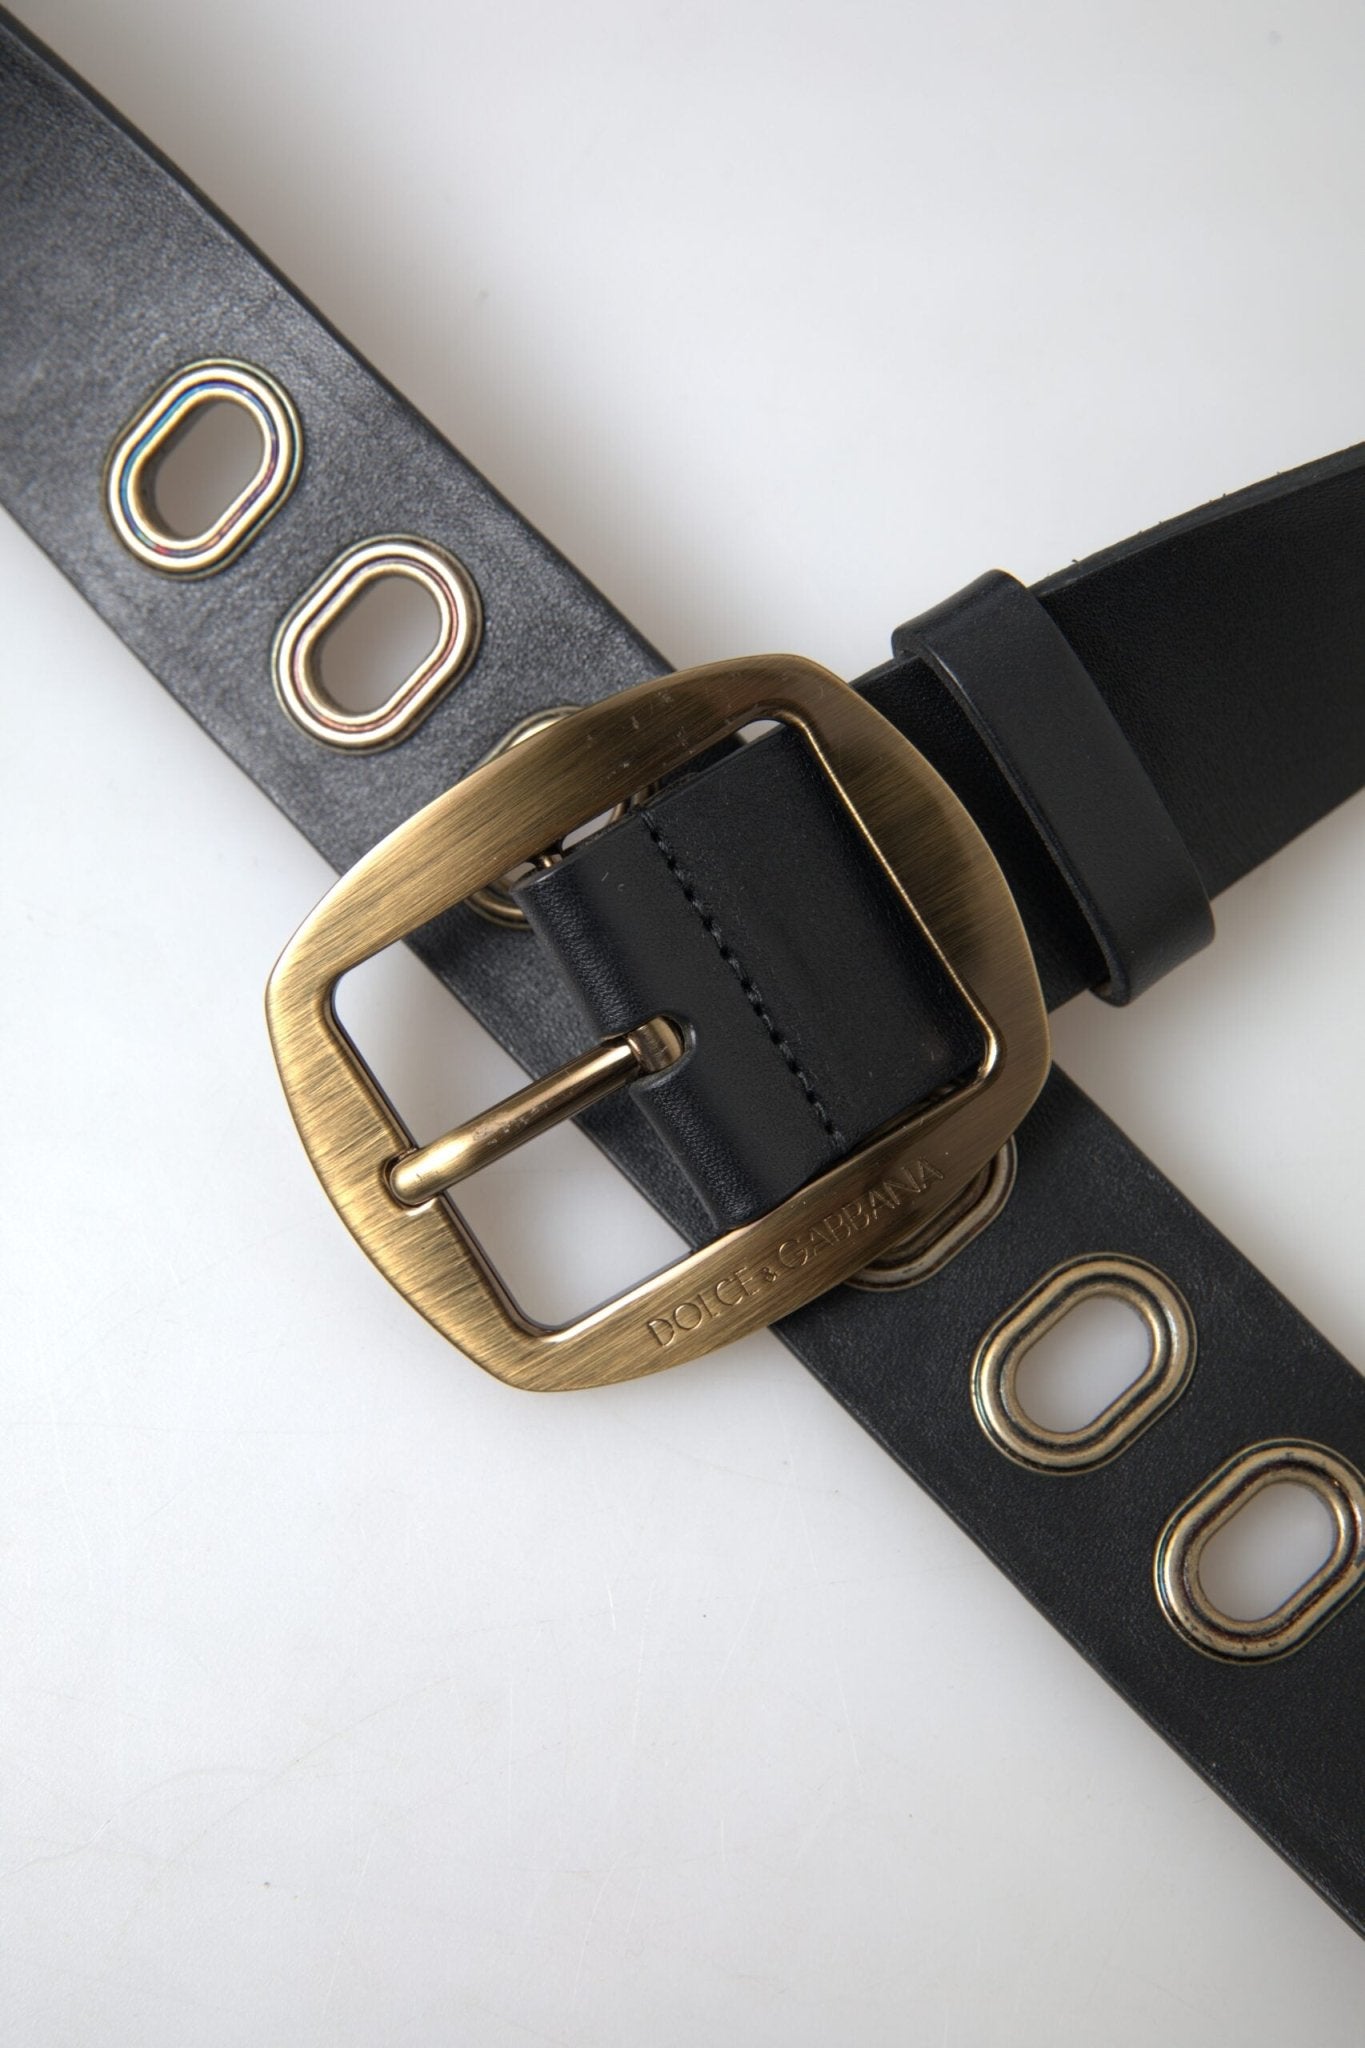 Dolce & Gabbana Sleek Italian Leather Belt with Metal Buckle